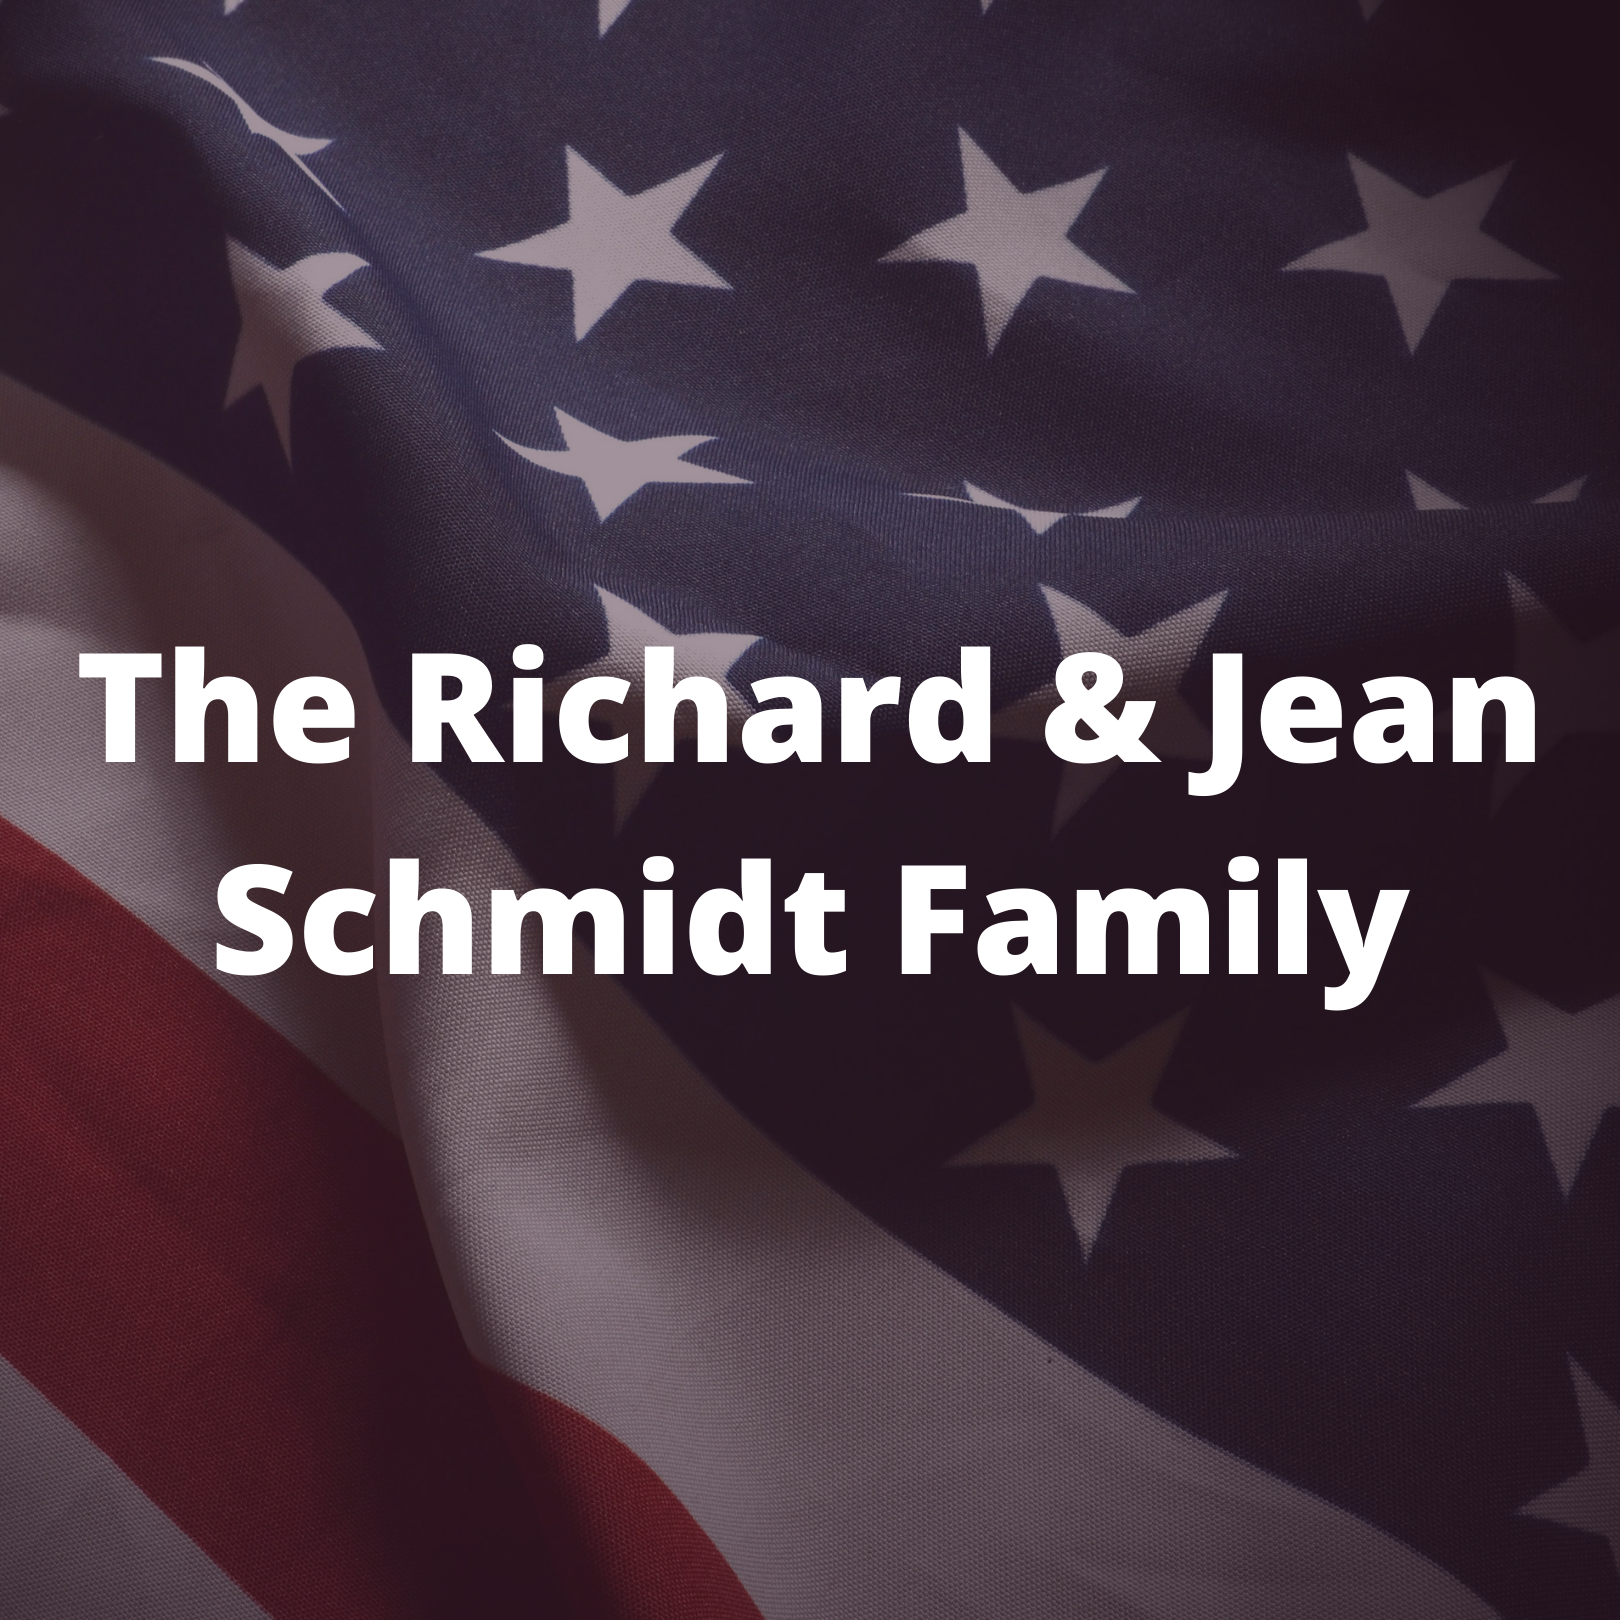 Richard & Jean Schmidt Family